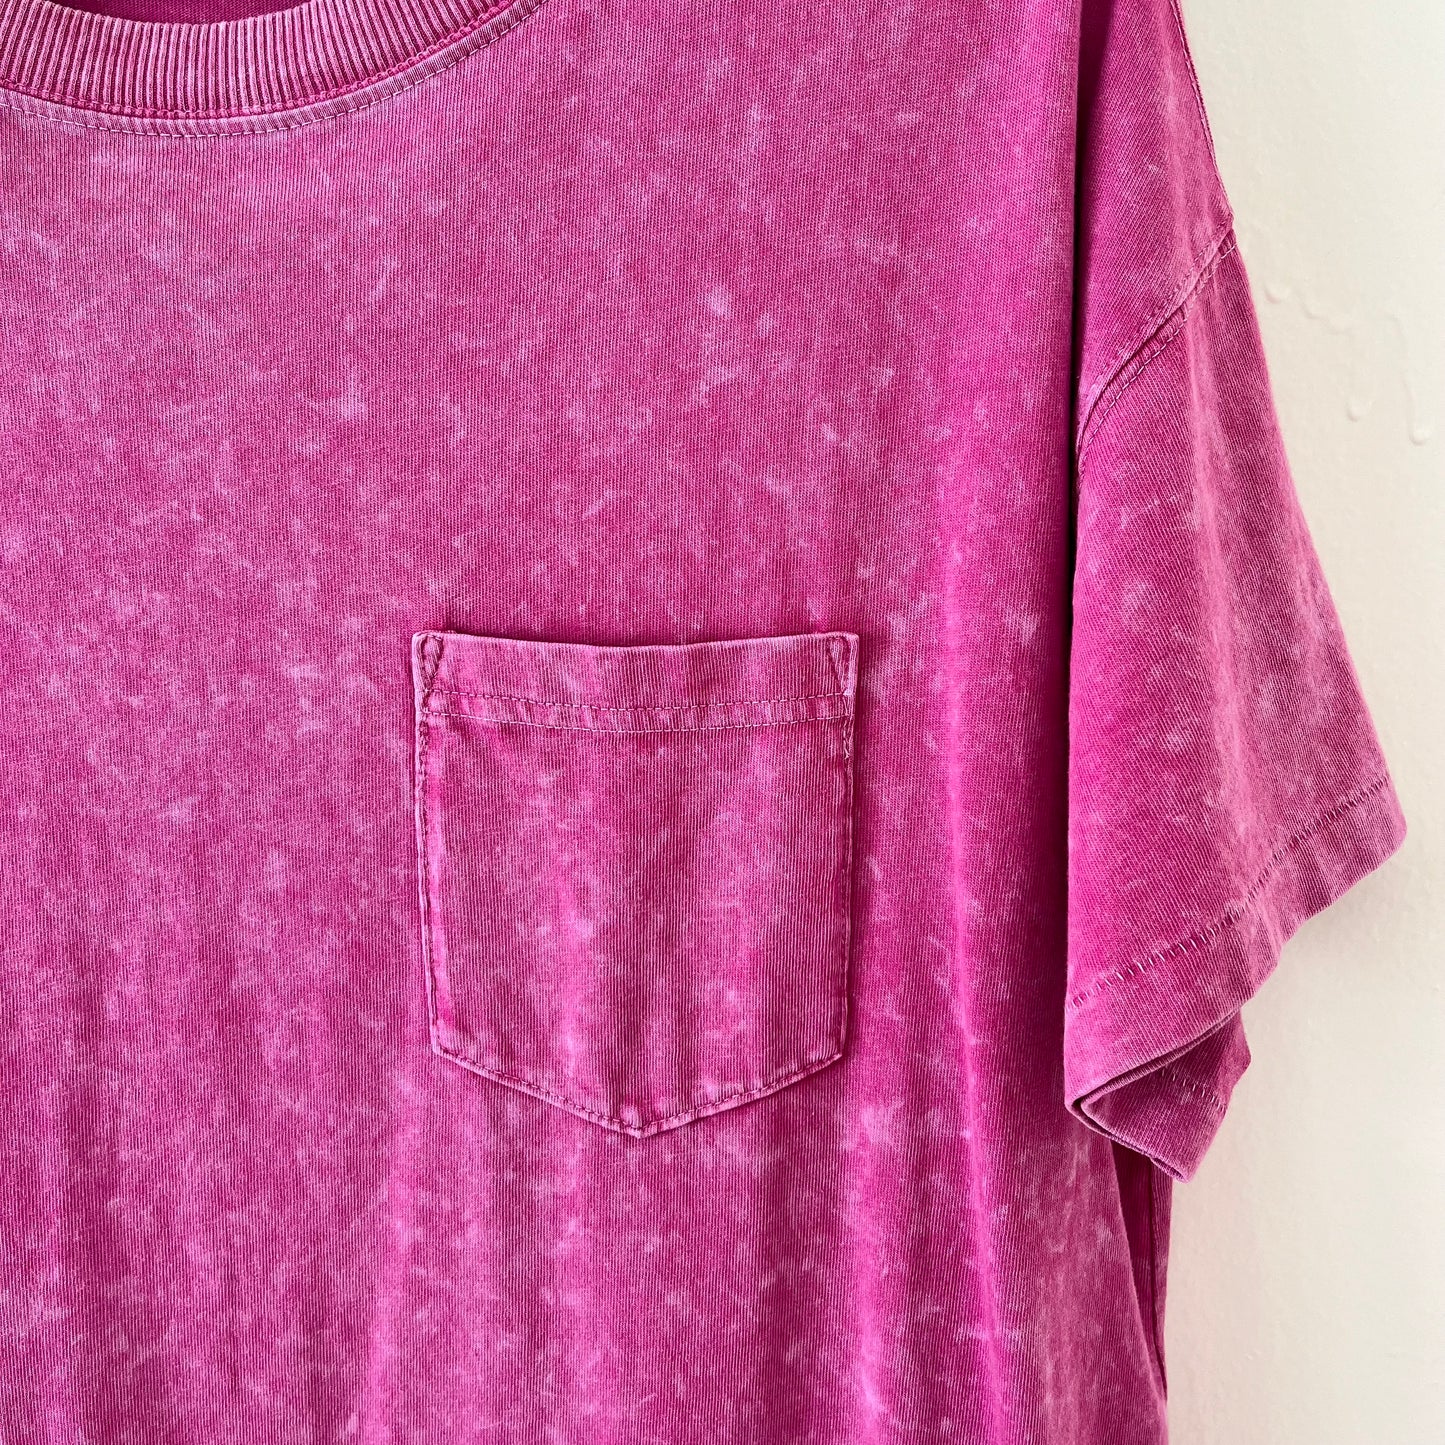 Pink Acid Wash T-Shirt Dress (M-L)